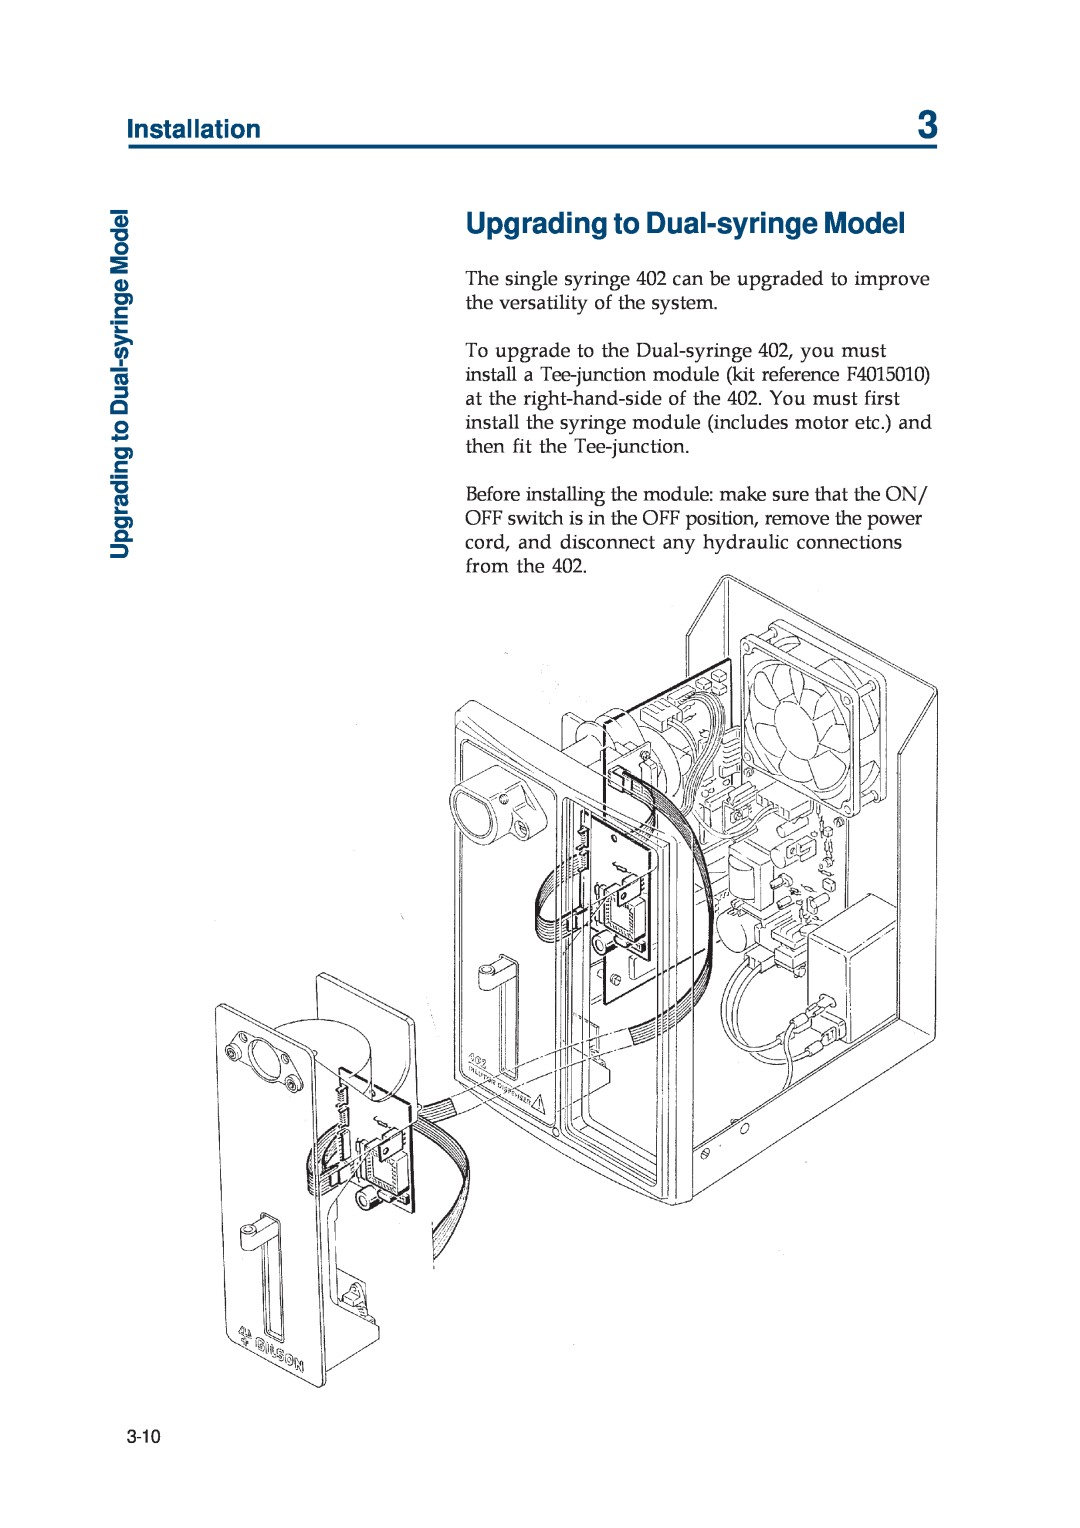 Gilson 402 manual Upgrading to Dual-syringe Model, Installation 